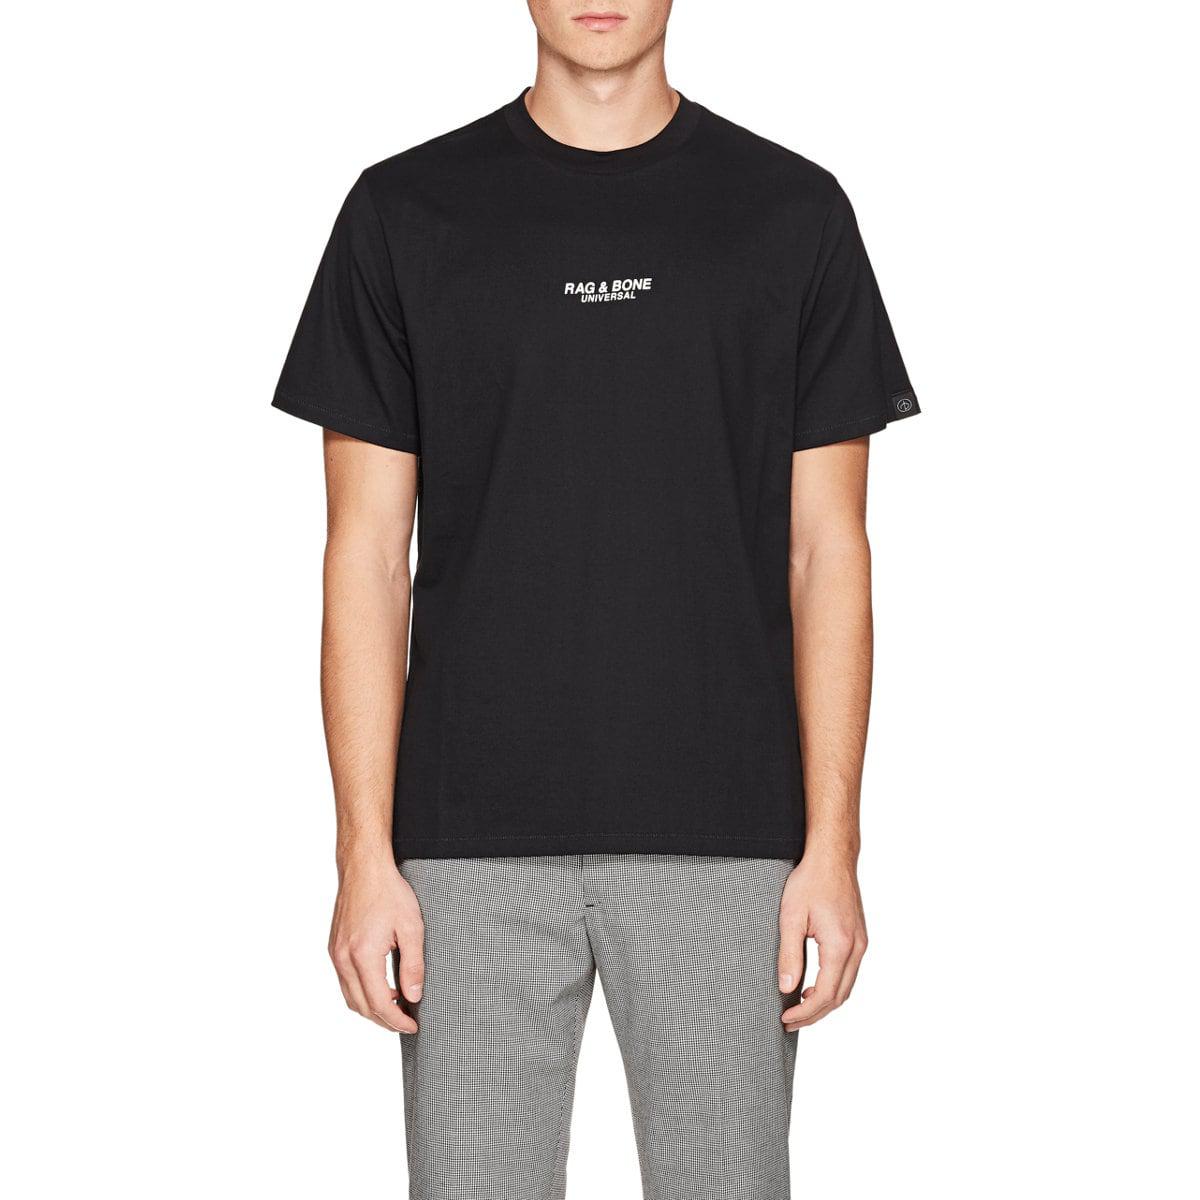 Rag & Bone Logo Cotton T-shirt in Black for Men - Save 58% - Lyst